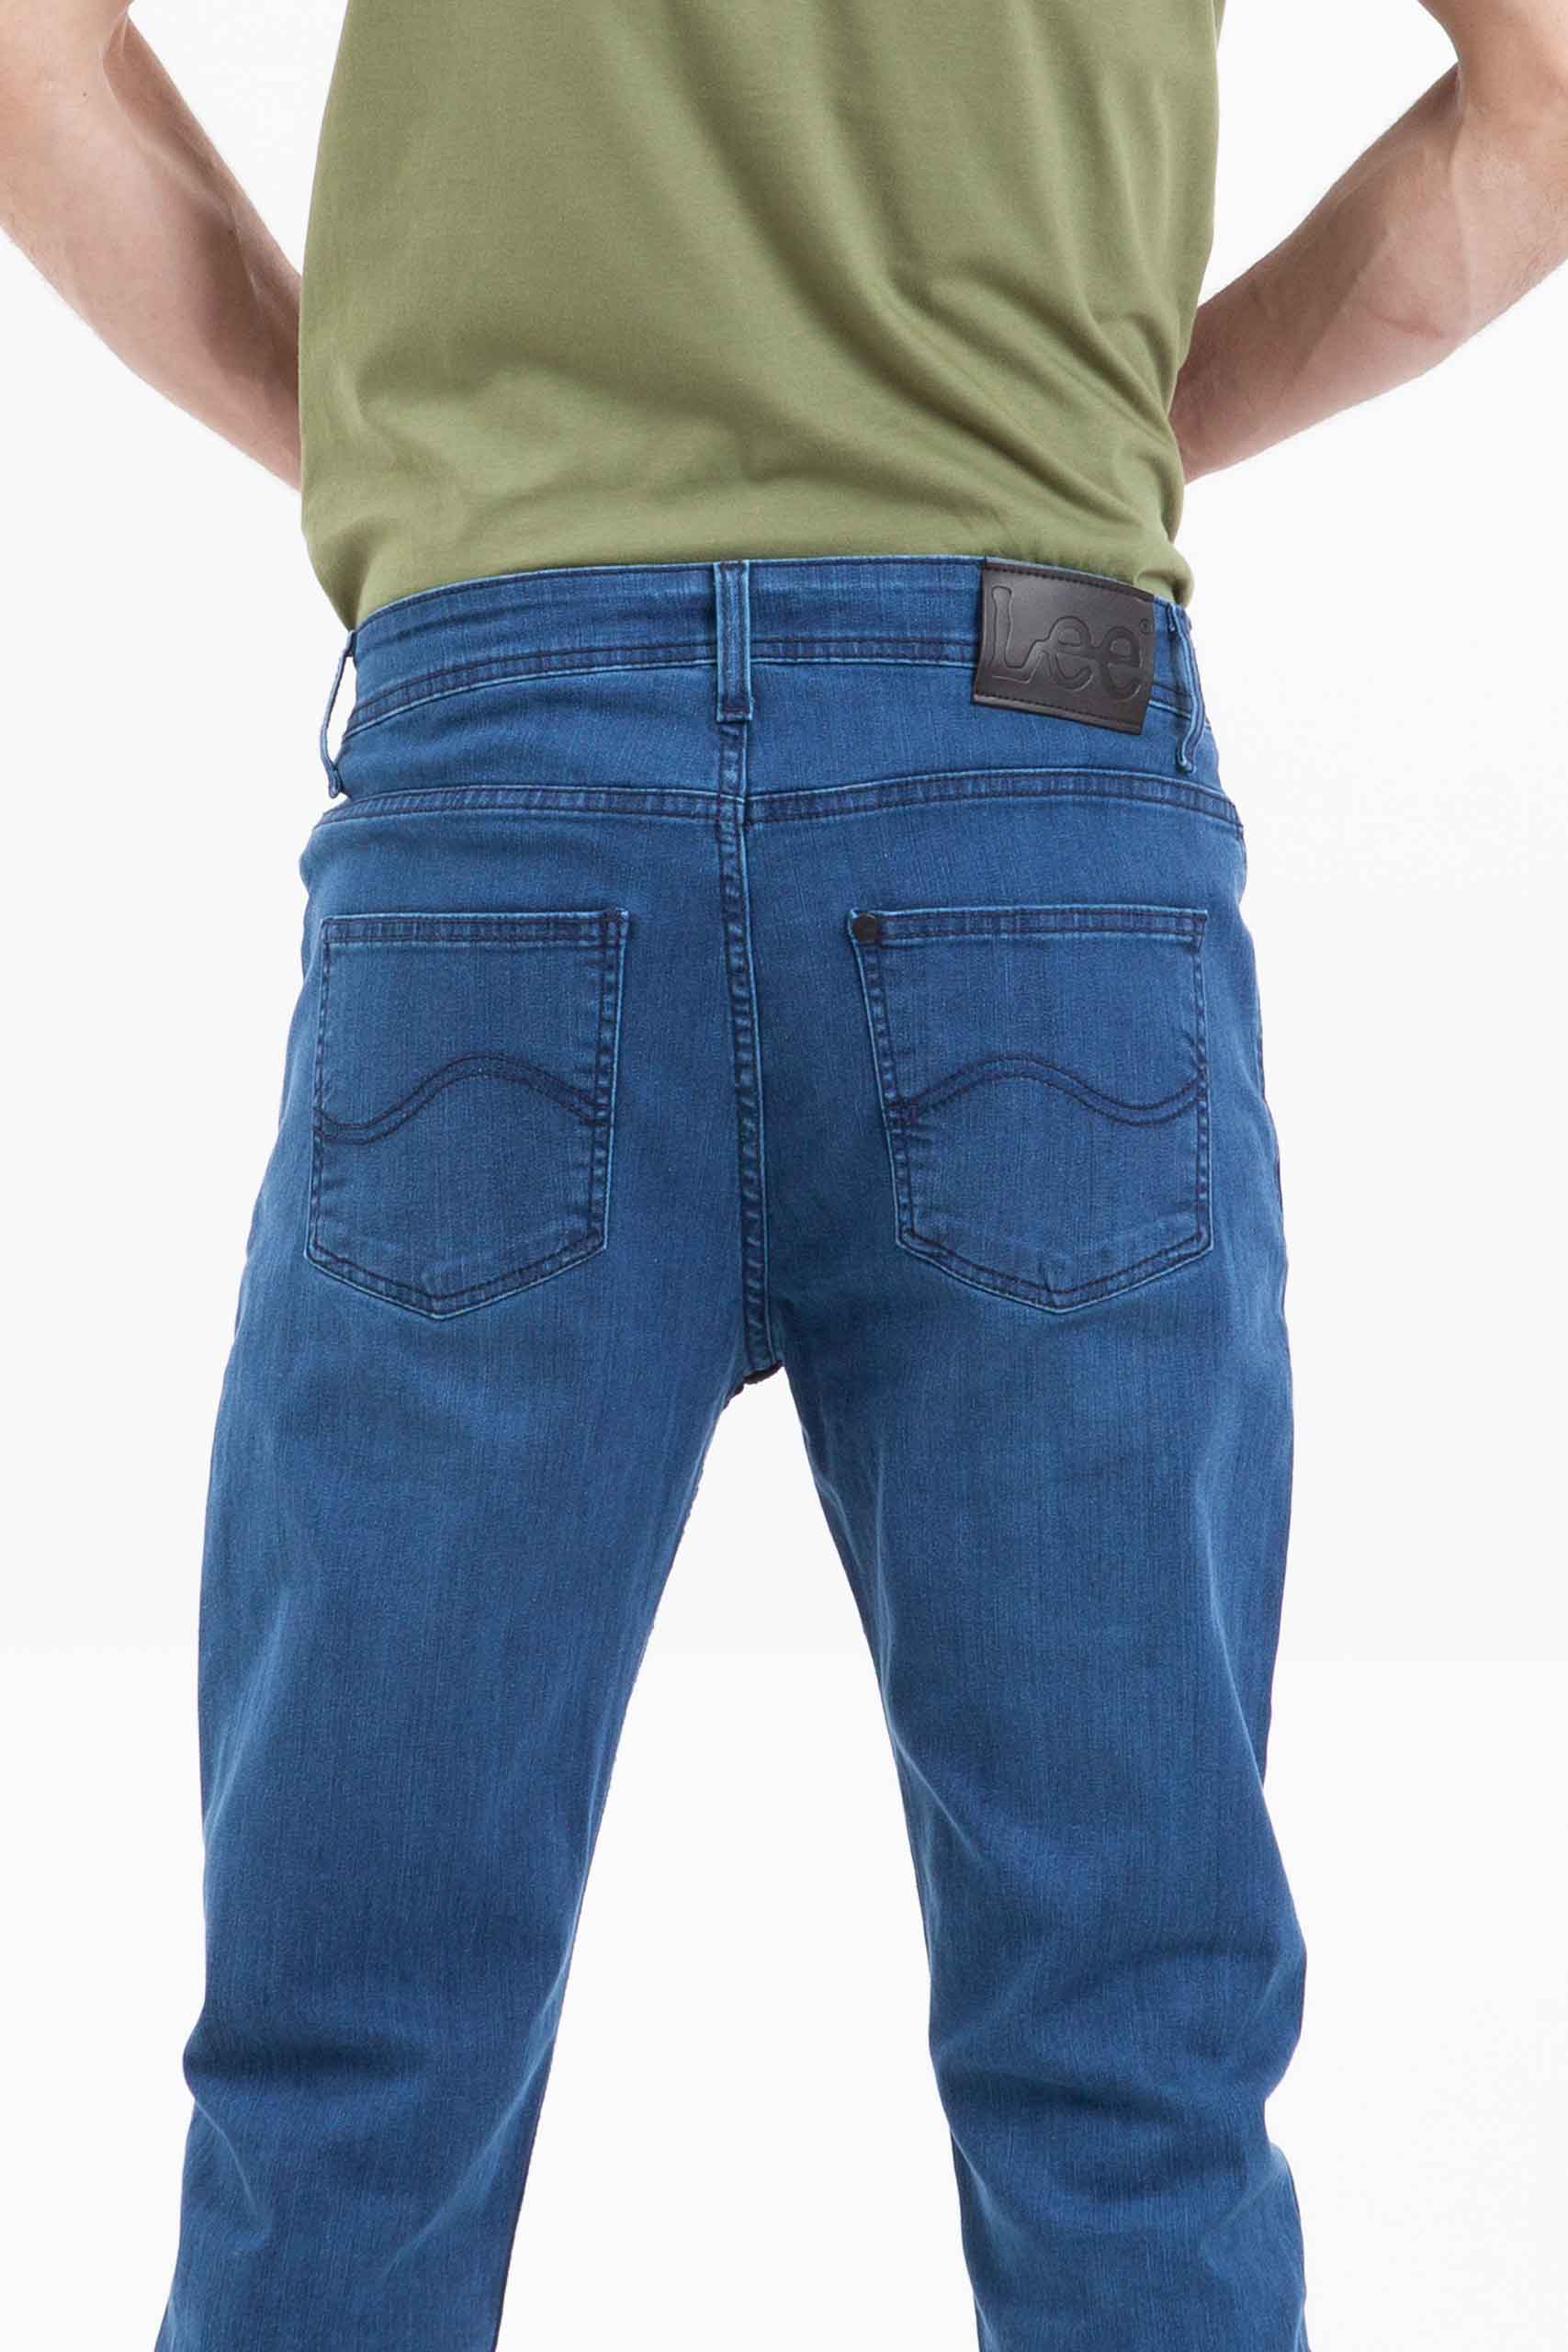 Vista posterior de pantalón de color azul de marca lee